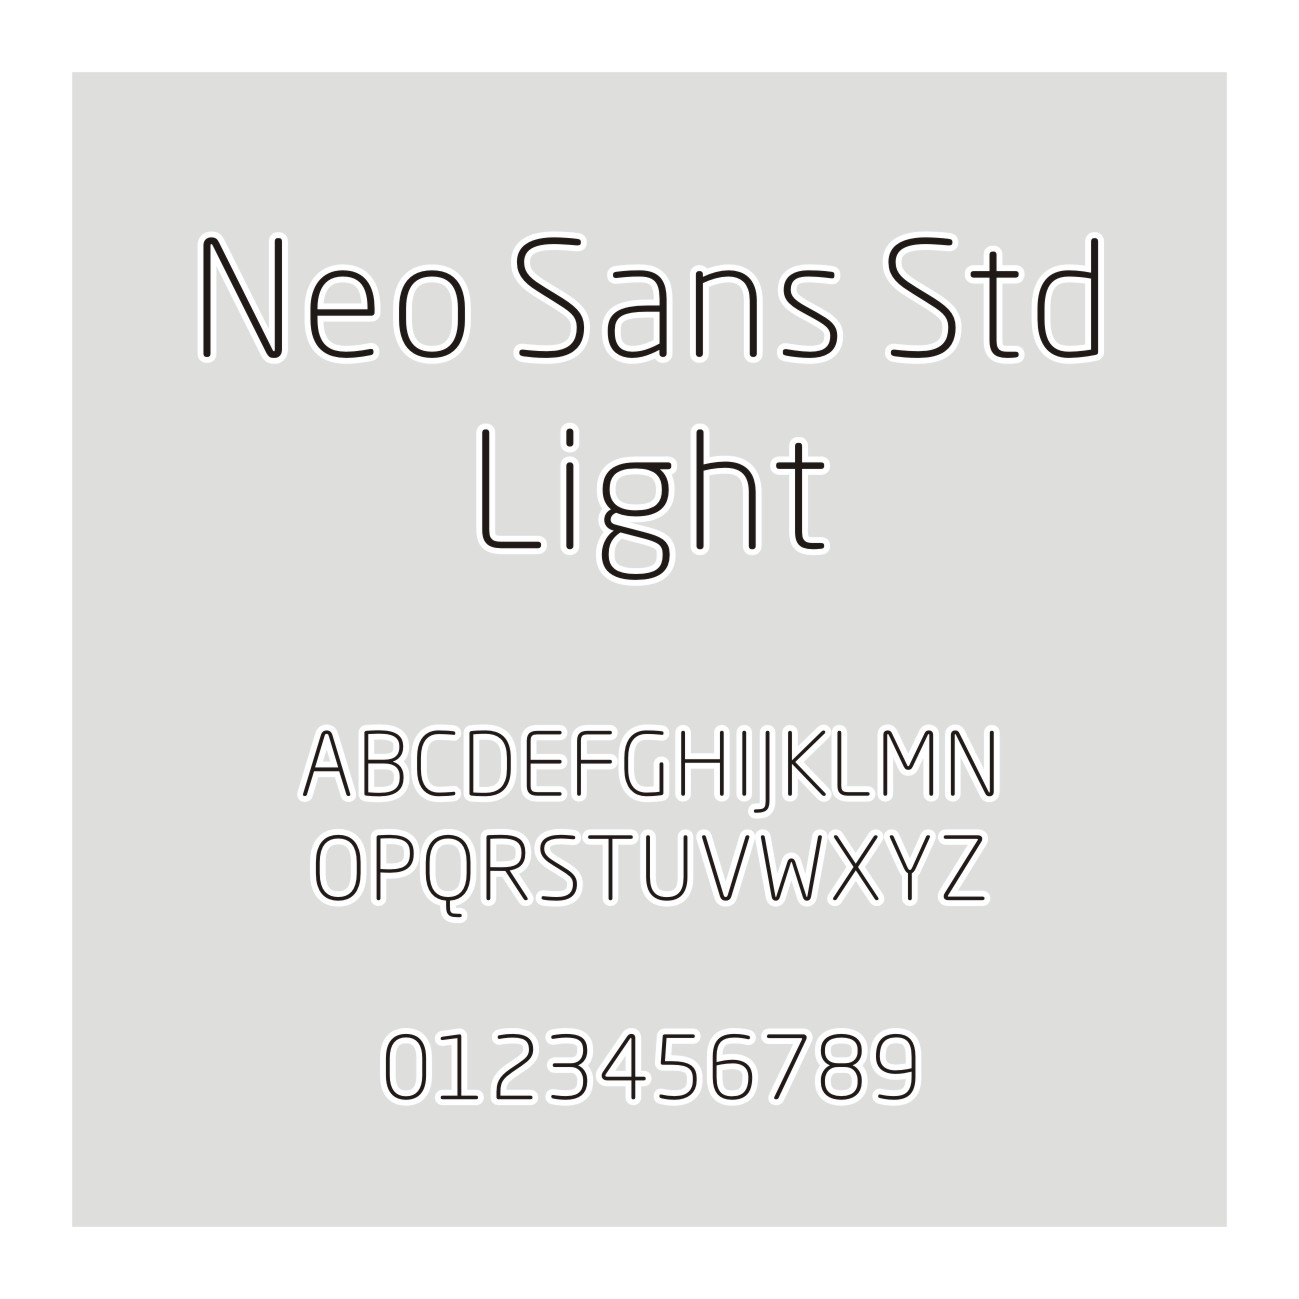 Neo Sans Std Light